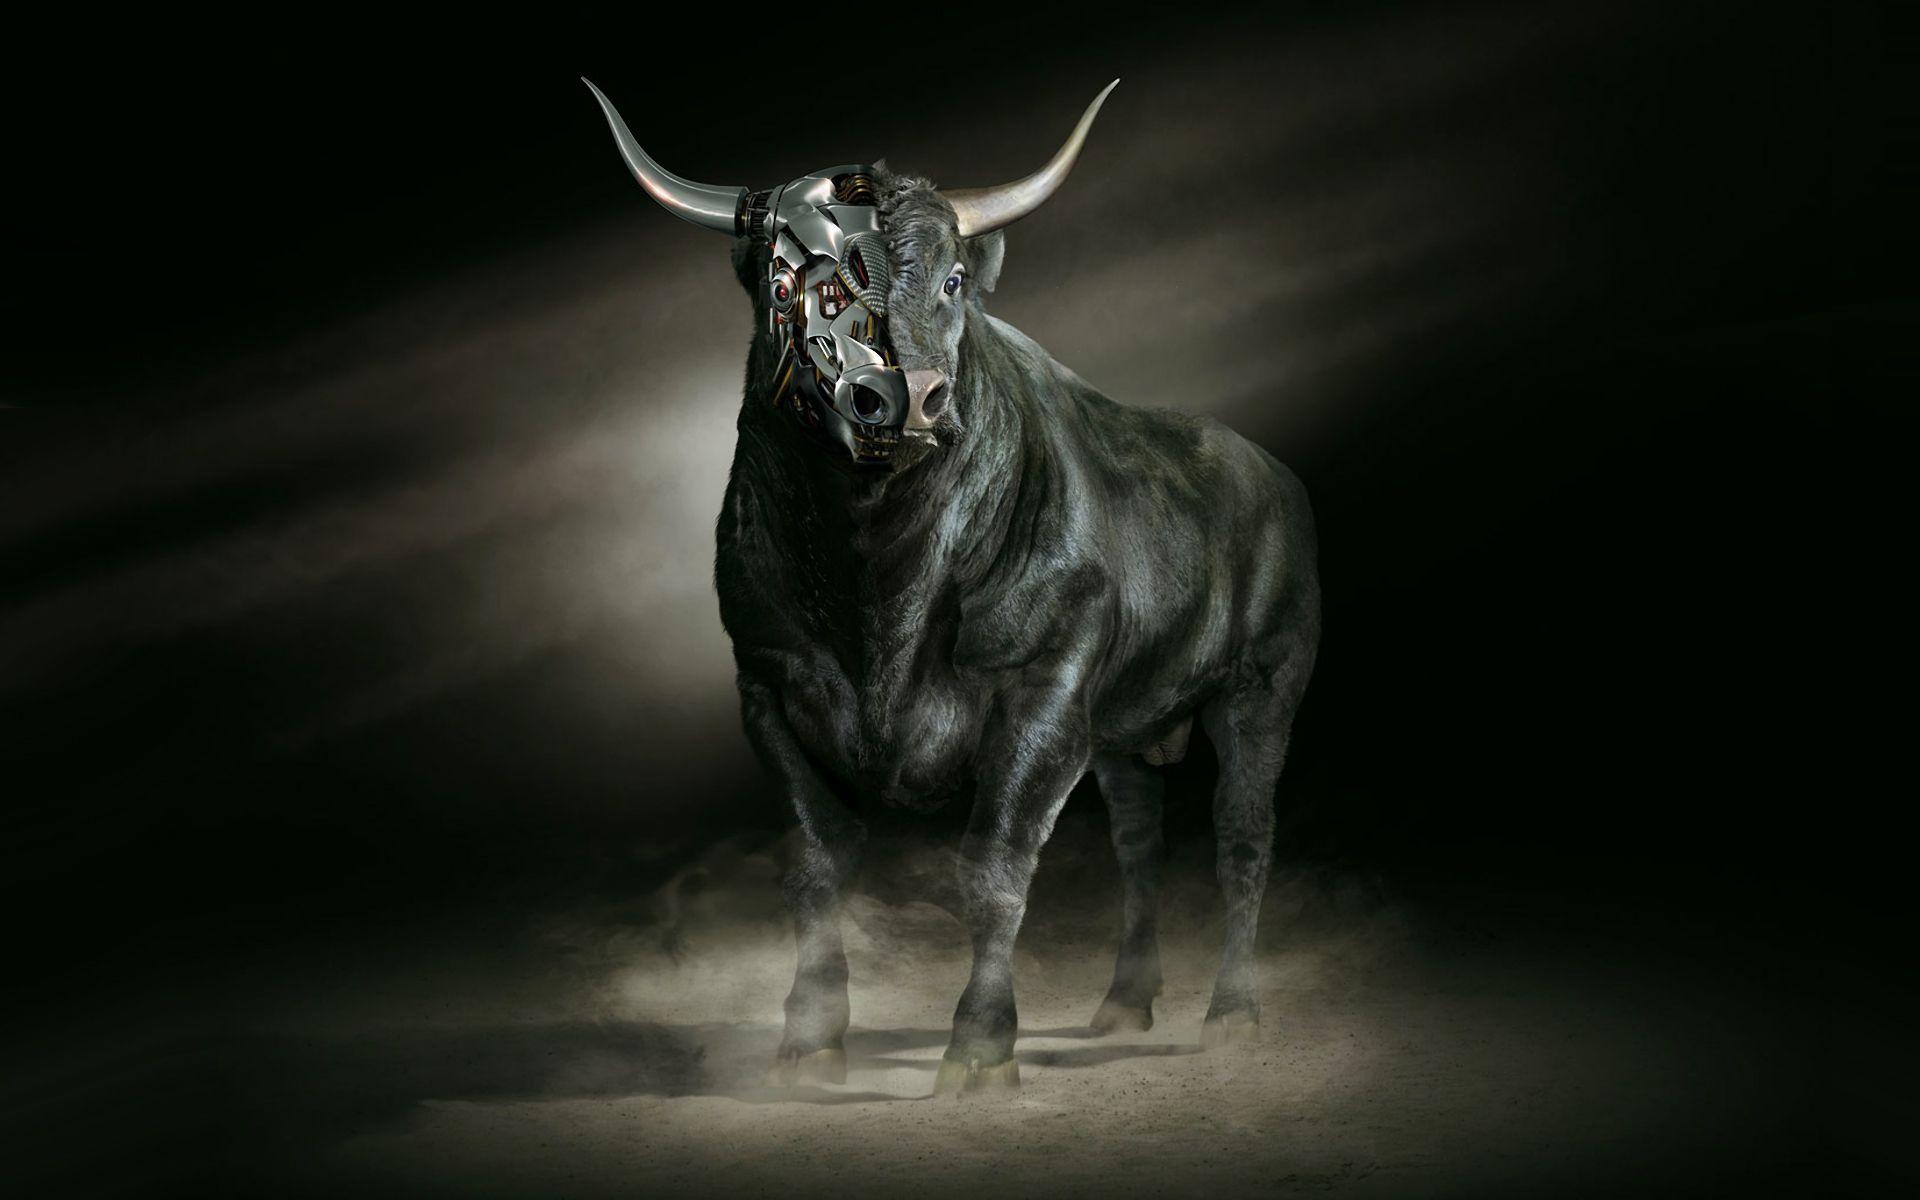 abstract bull art. Black Robot Bull Wallpaper Picture Photo